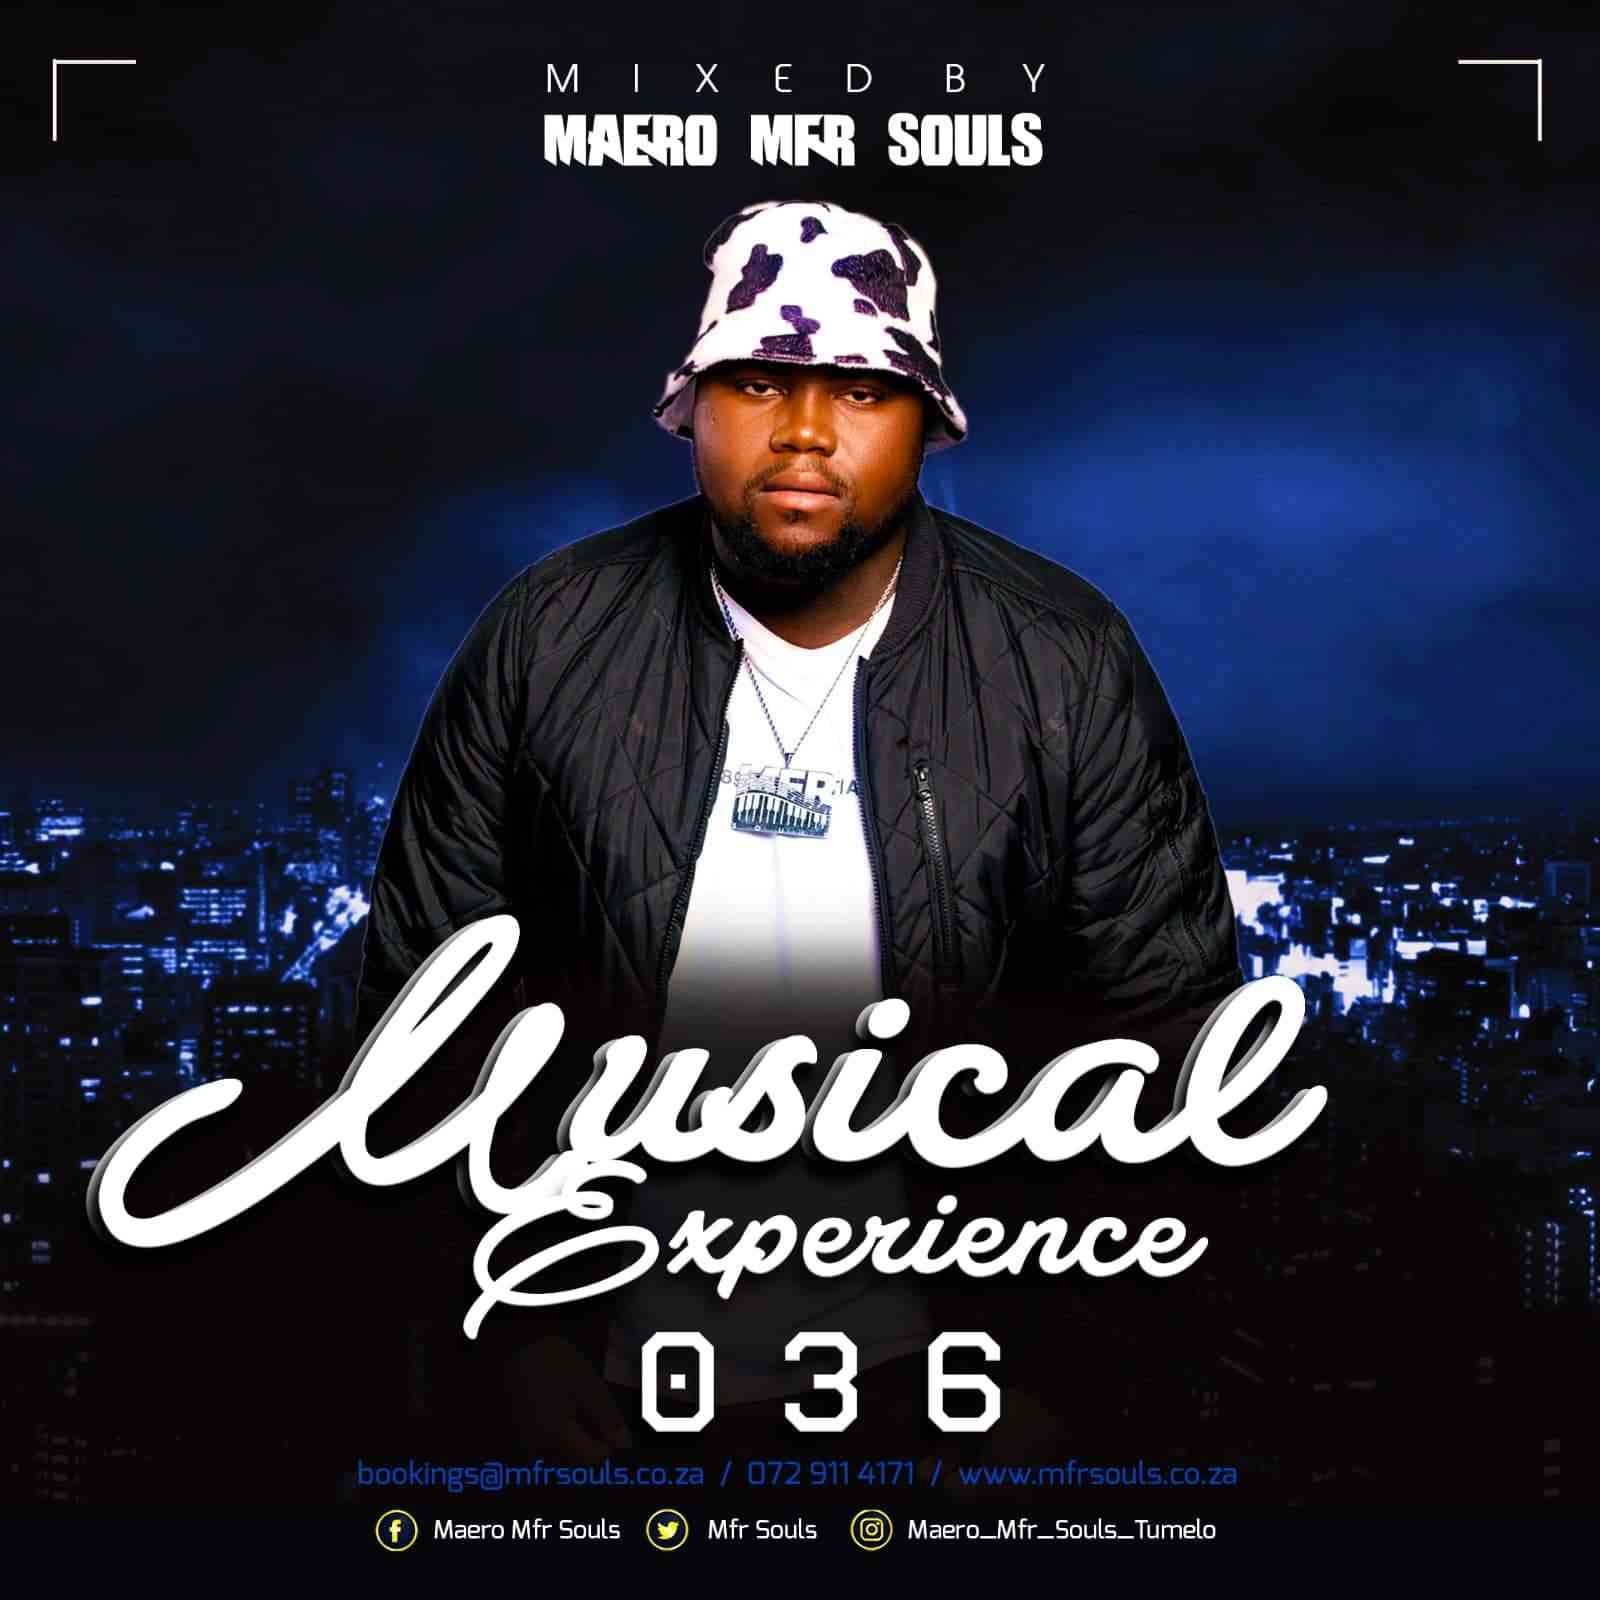 Mfr Souls (Maero) Musical Experience 036 Mix 